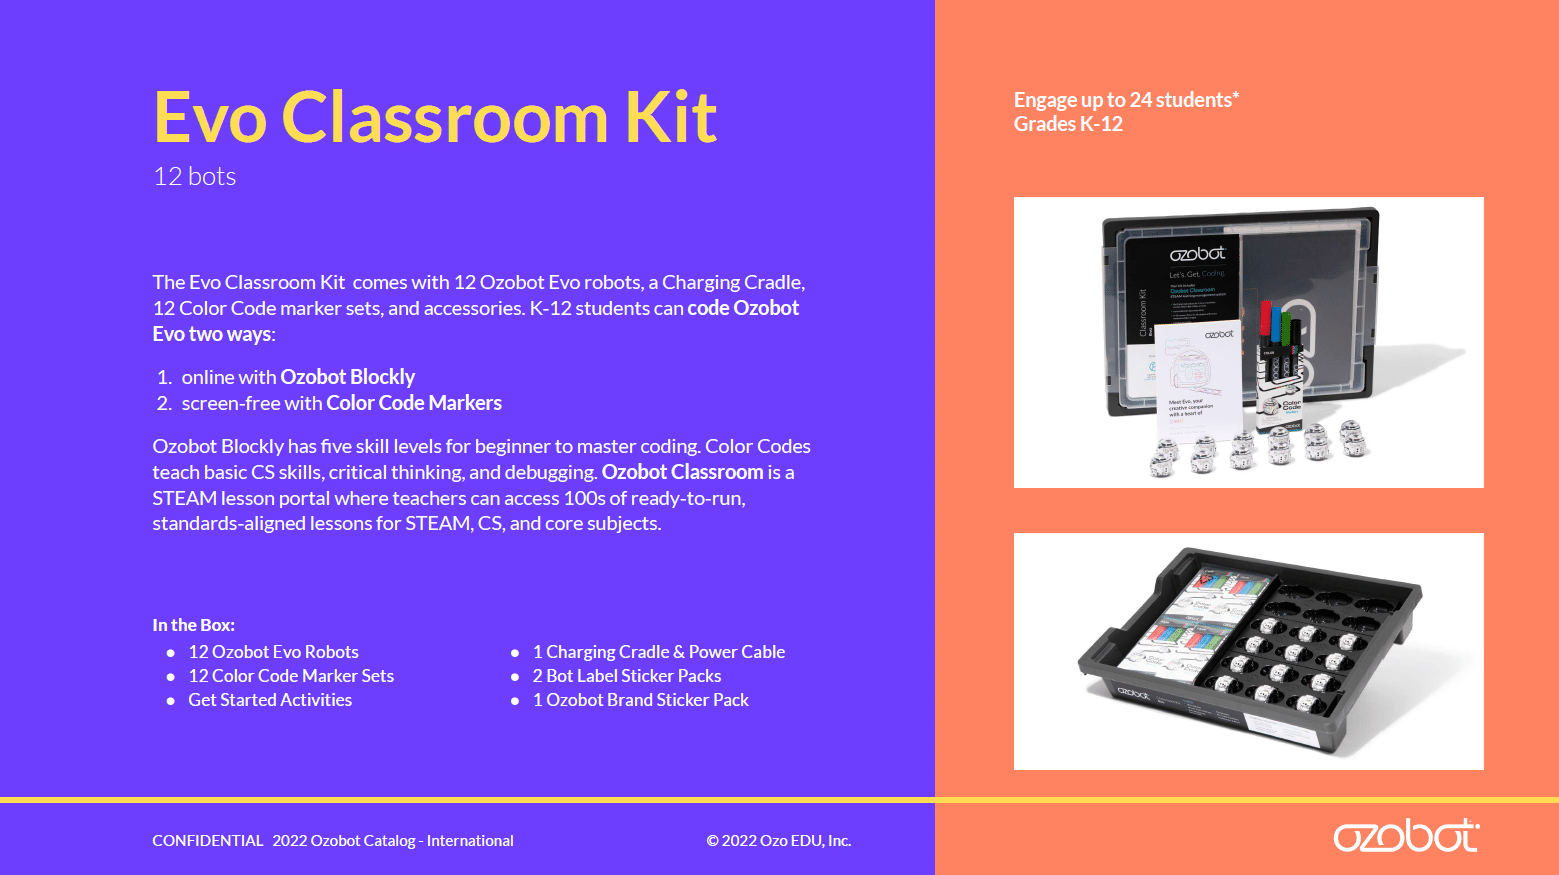 Evo Classroom Kit for K-12